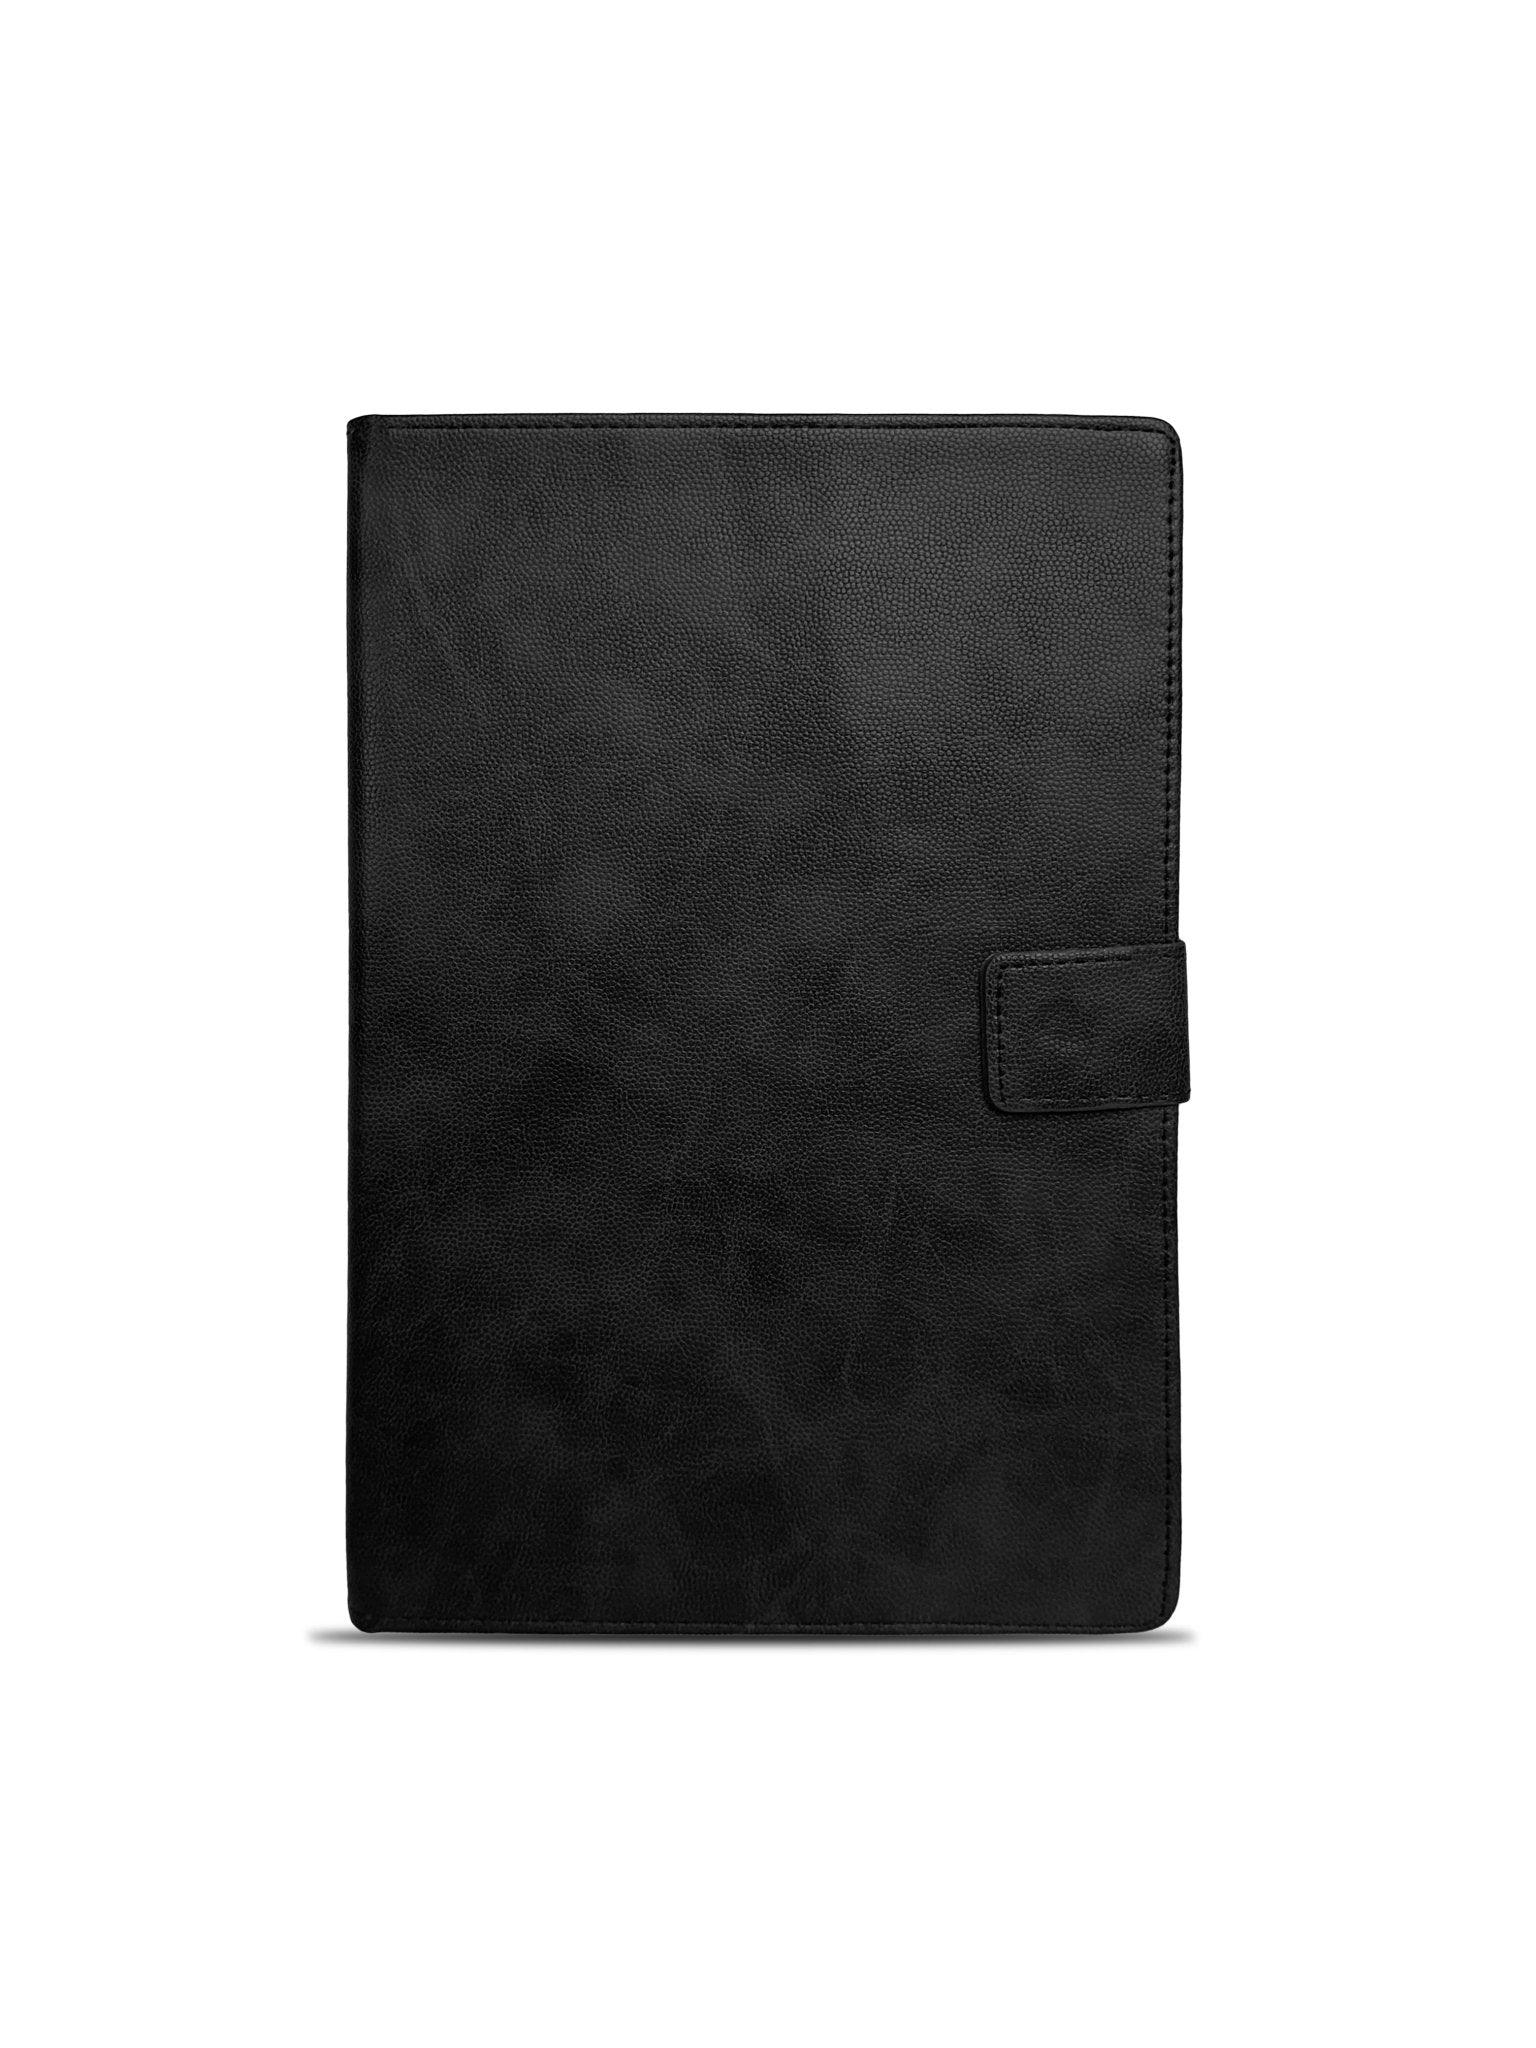 samsung-a8-flip-leather-protective-case-black